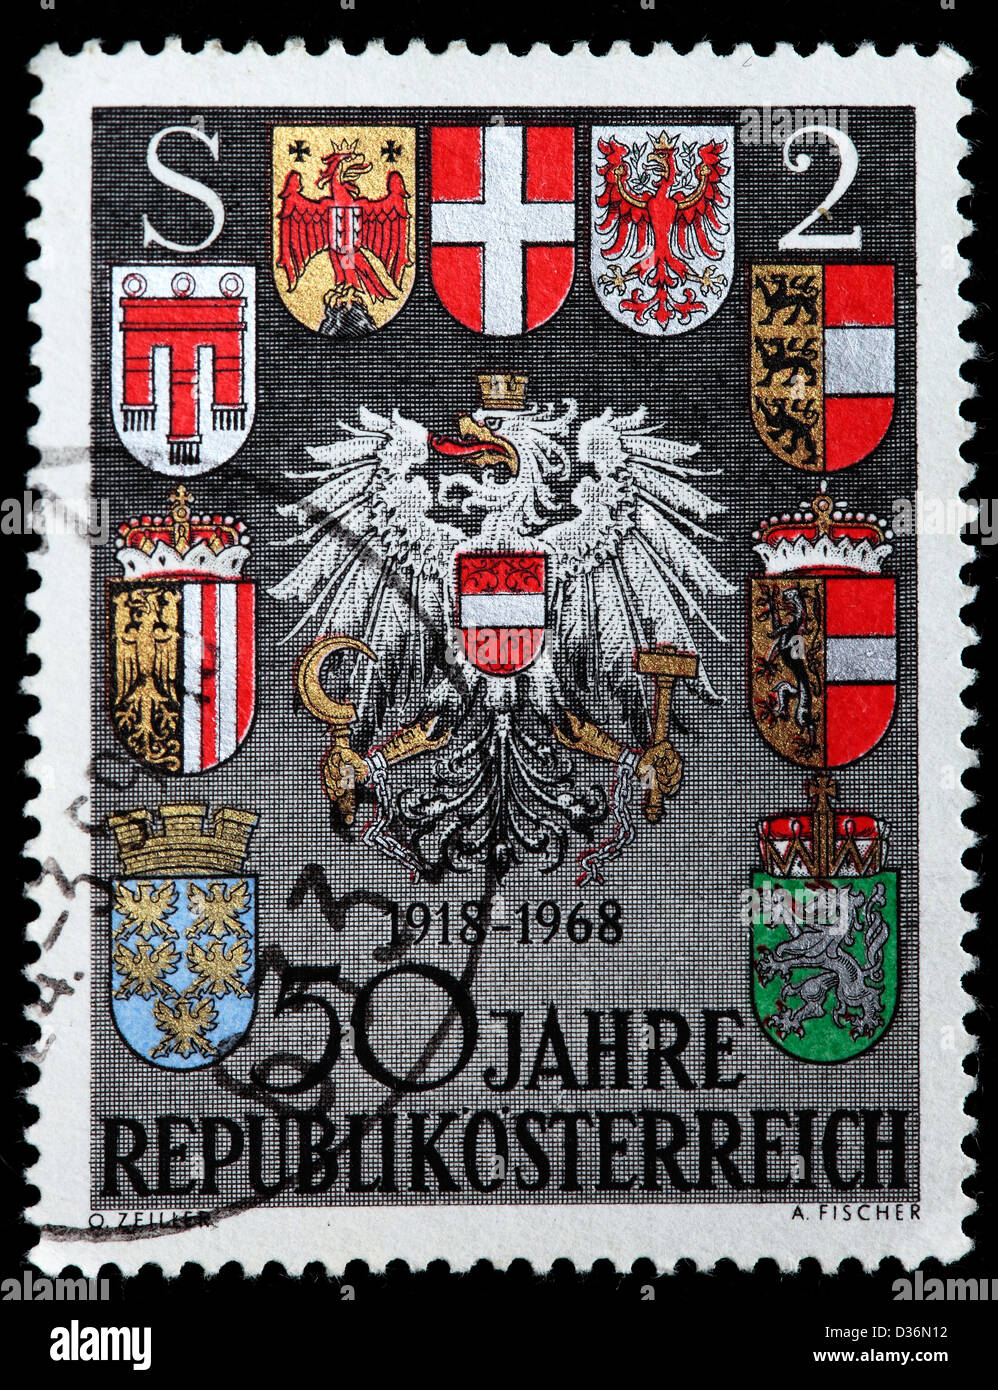 50th anniversary of Austrian republic, postage stamp, Austria, 1968 Stock Photo